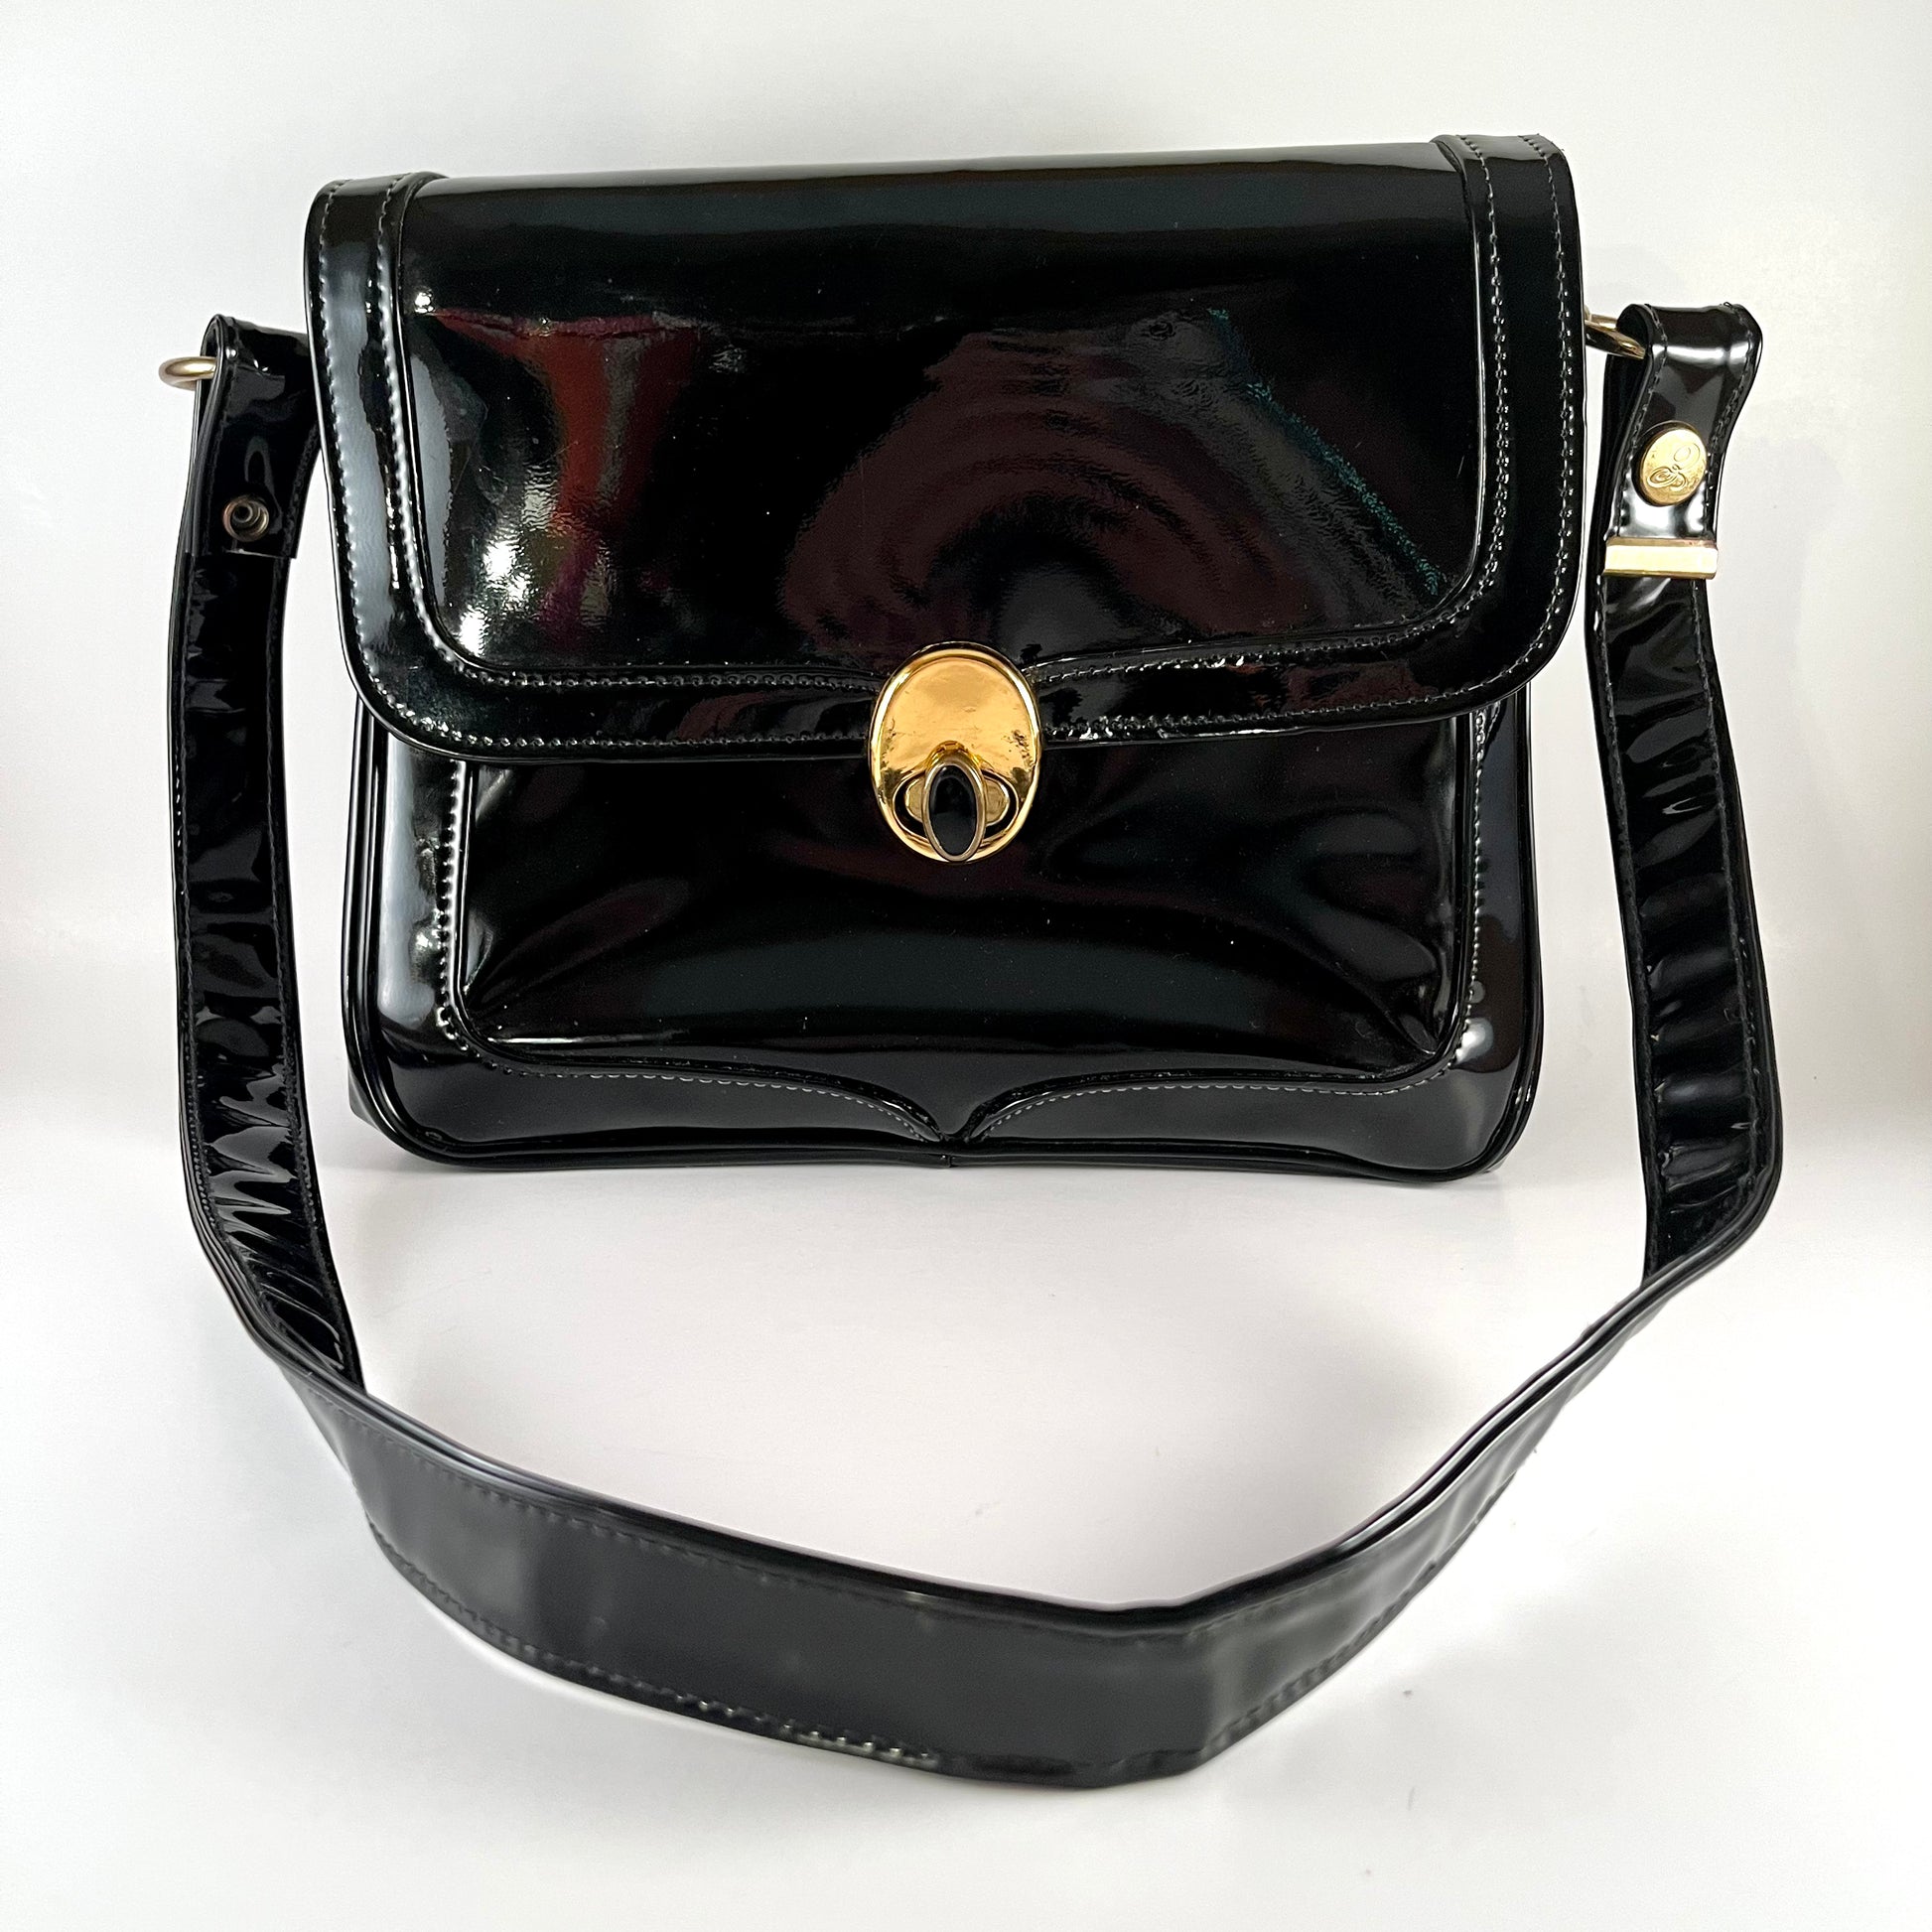 Vintage 50s Black Patent Leather Clutch